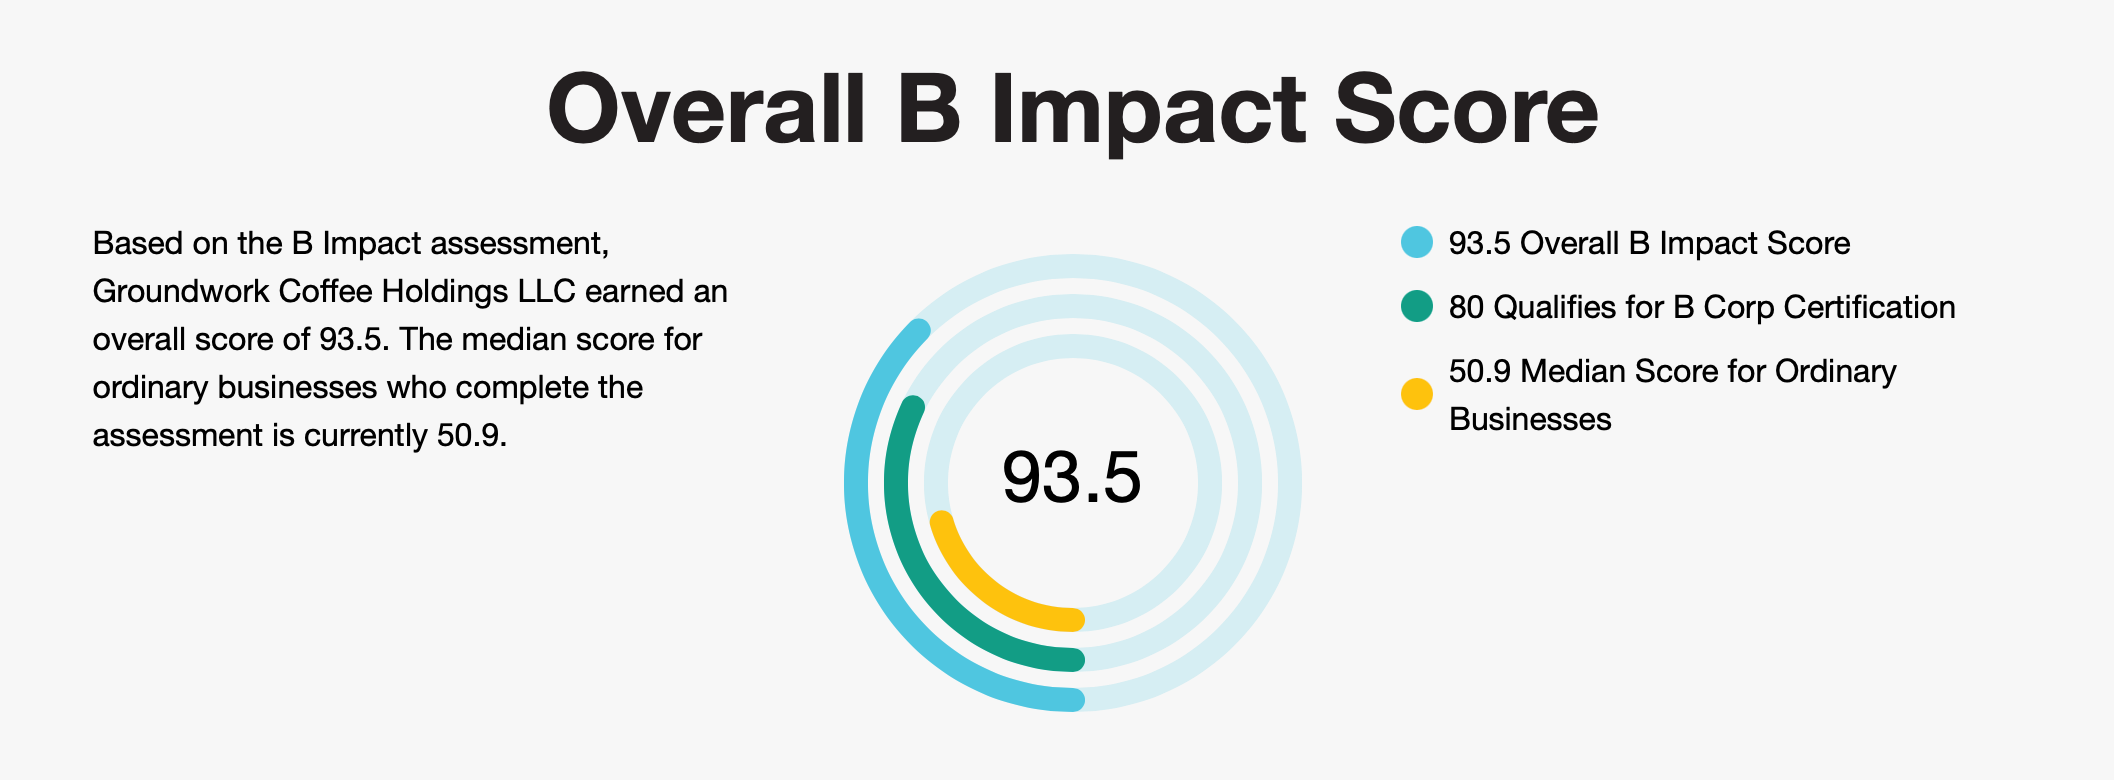 B Corp Overall Impact Score: 93.5